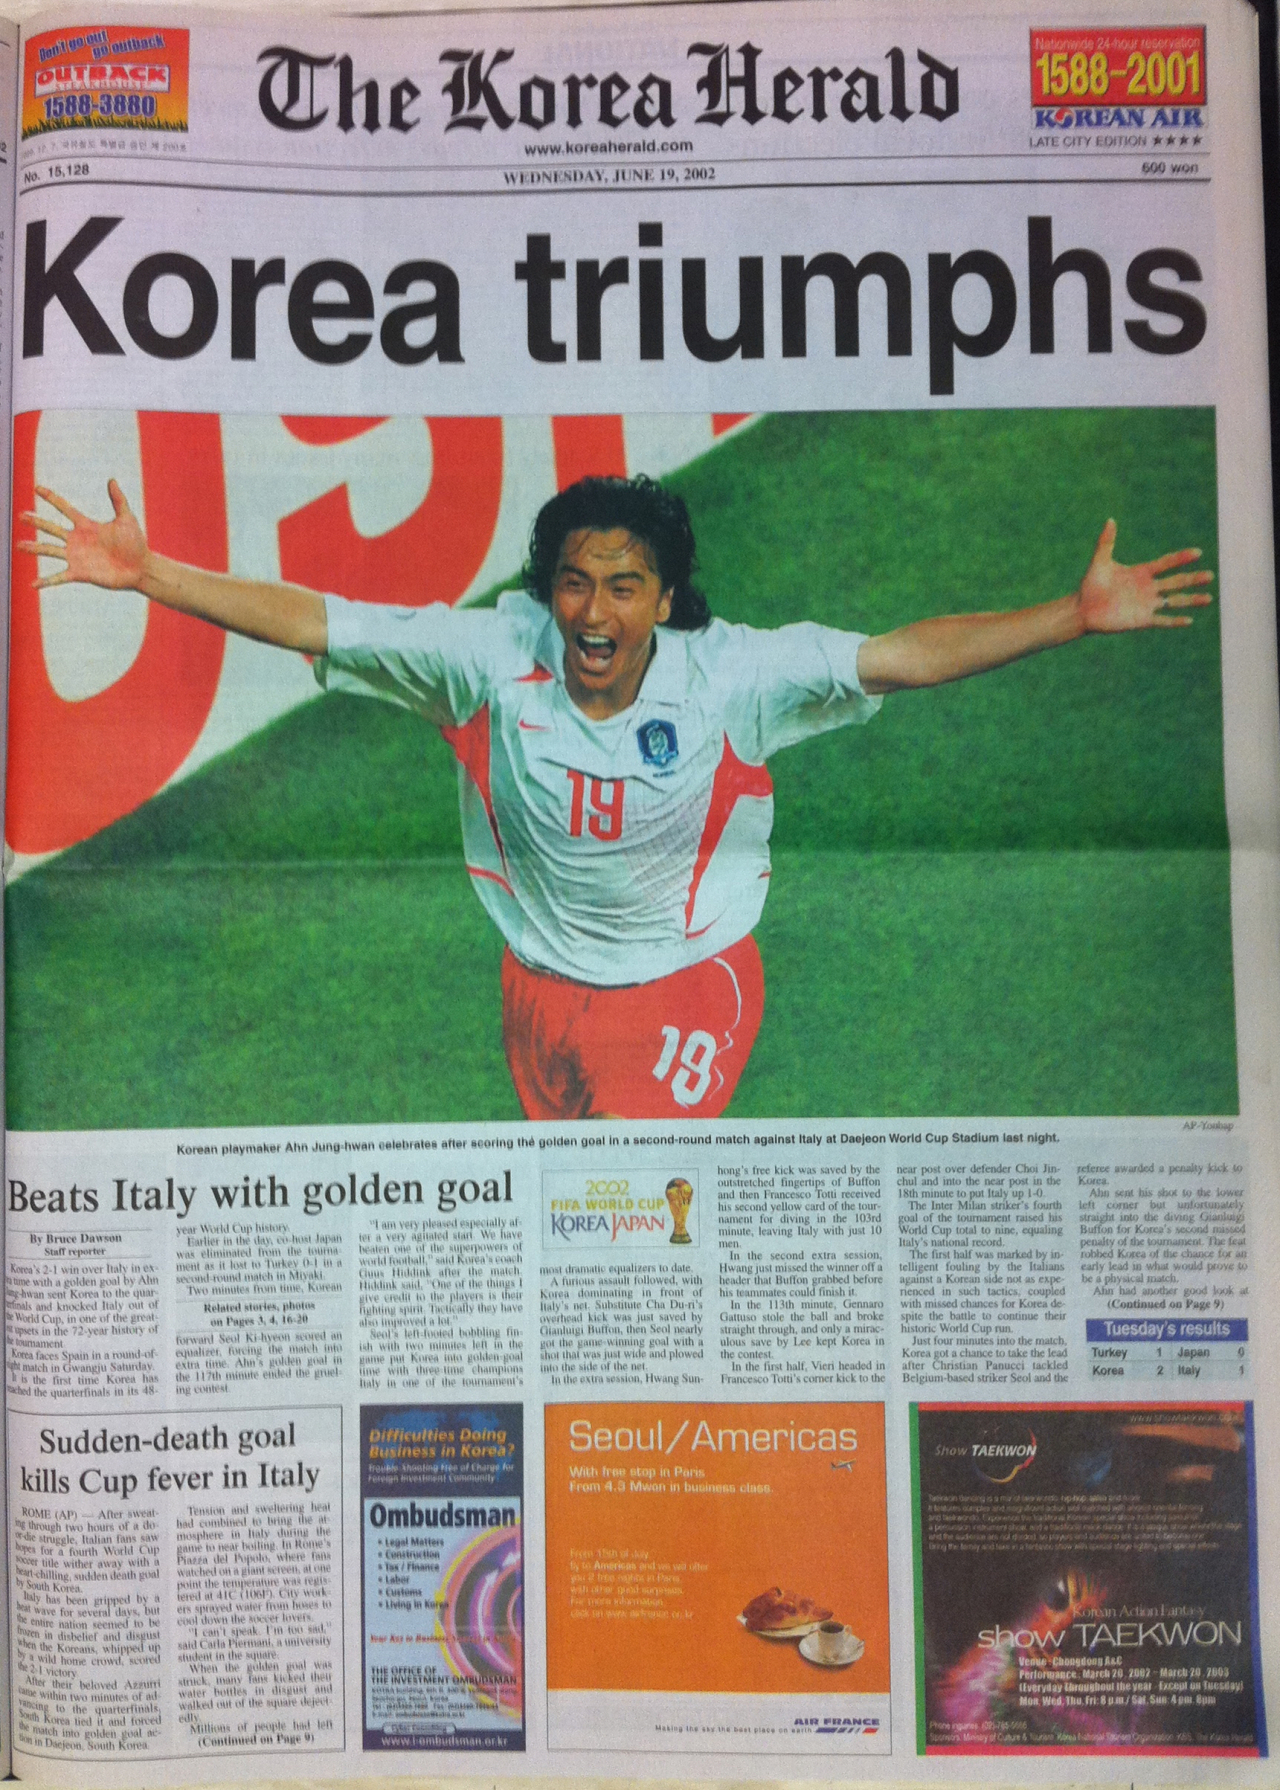 The June 19, 2002 edition of The Korea Herald. (The Korea Herald)